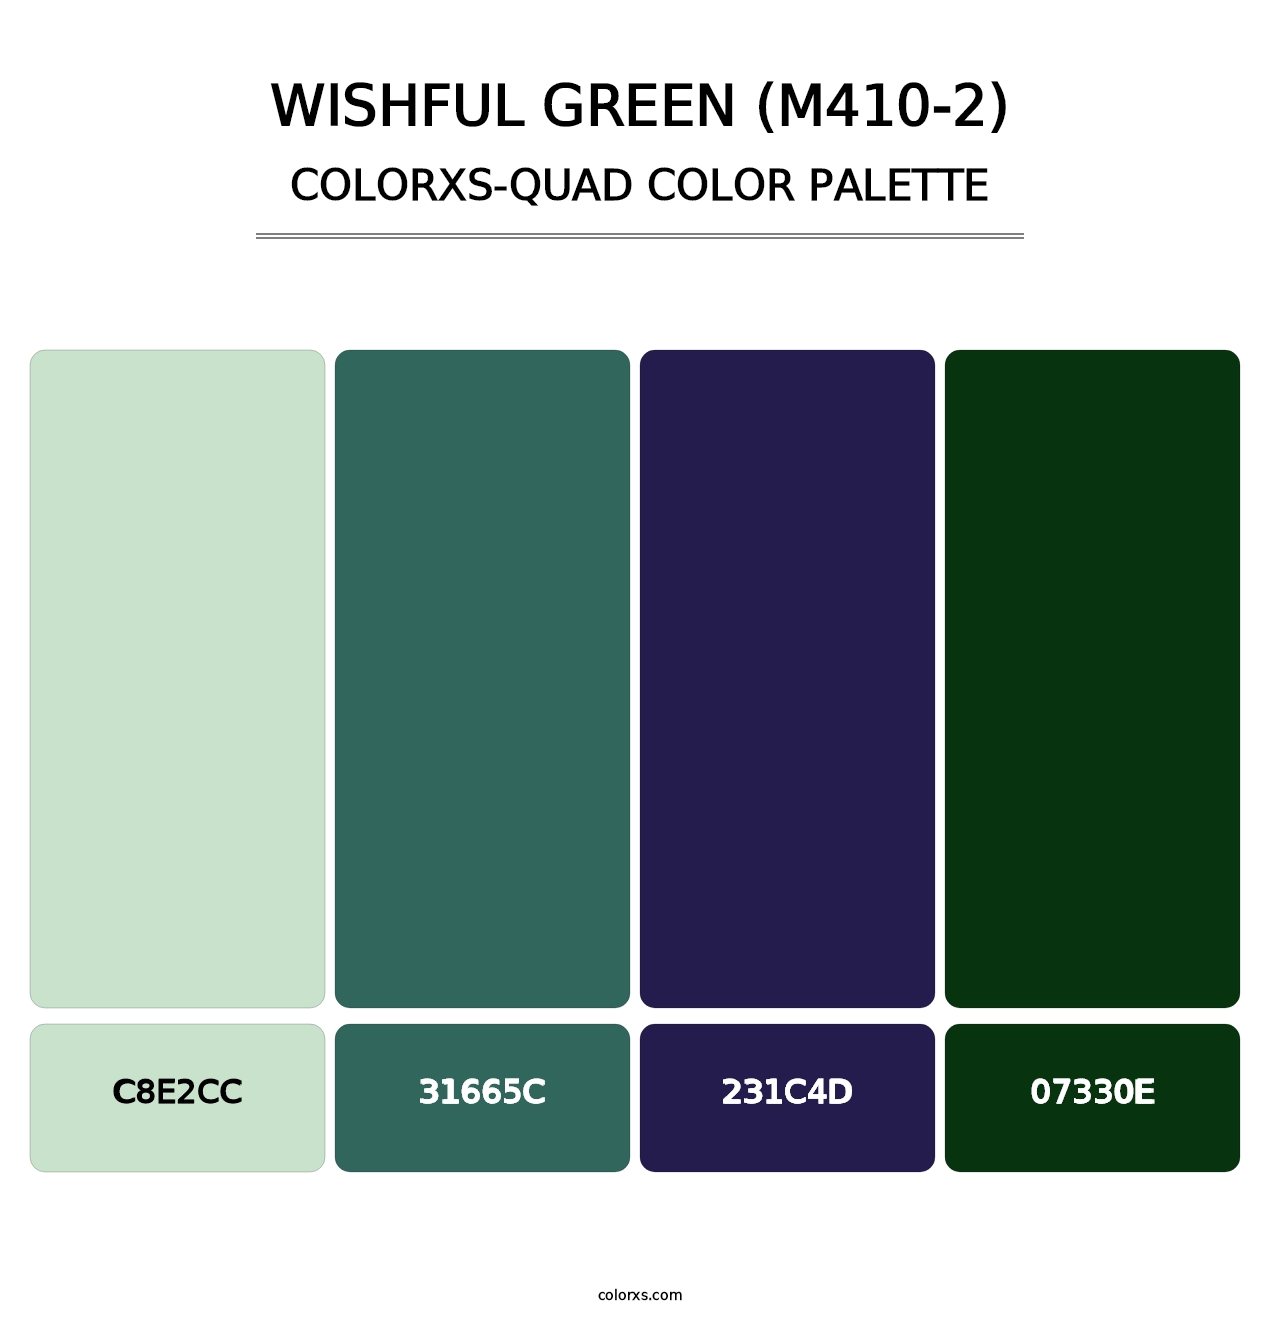 Wishful Green (M410-2) - Colorxs Quad Palette